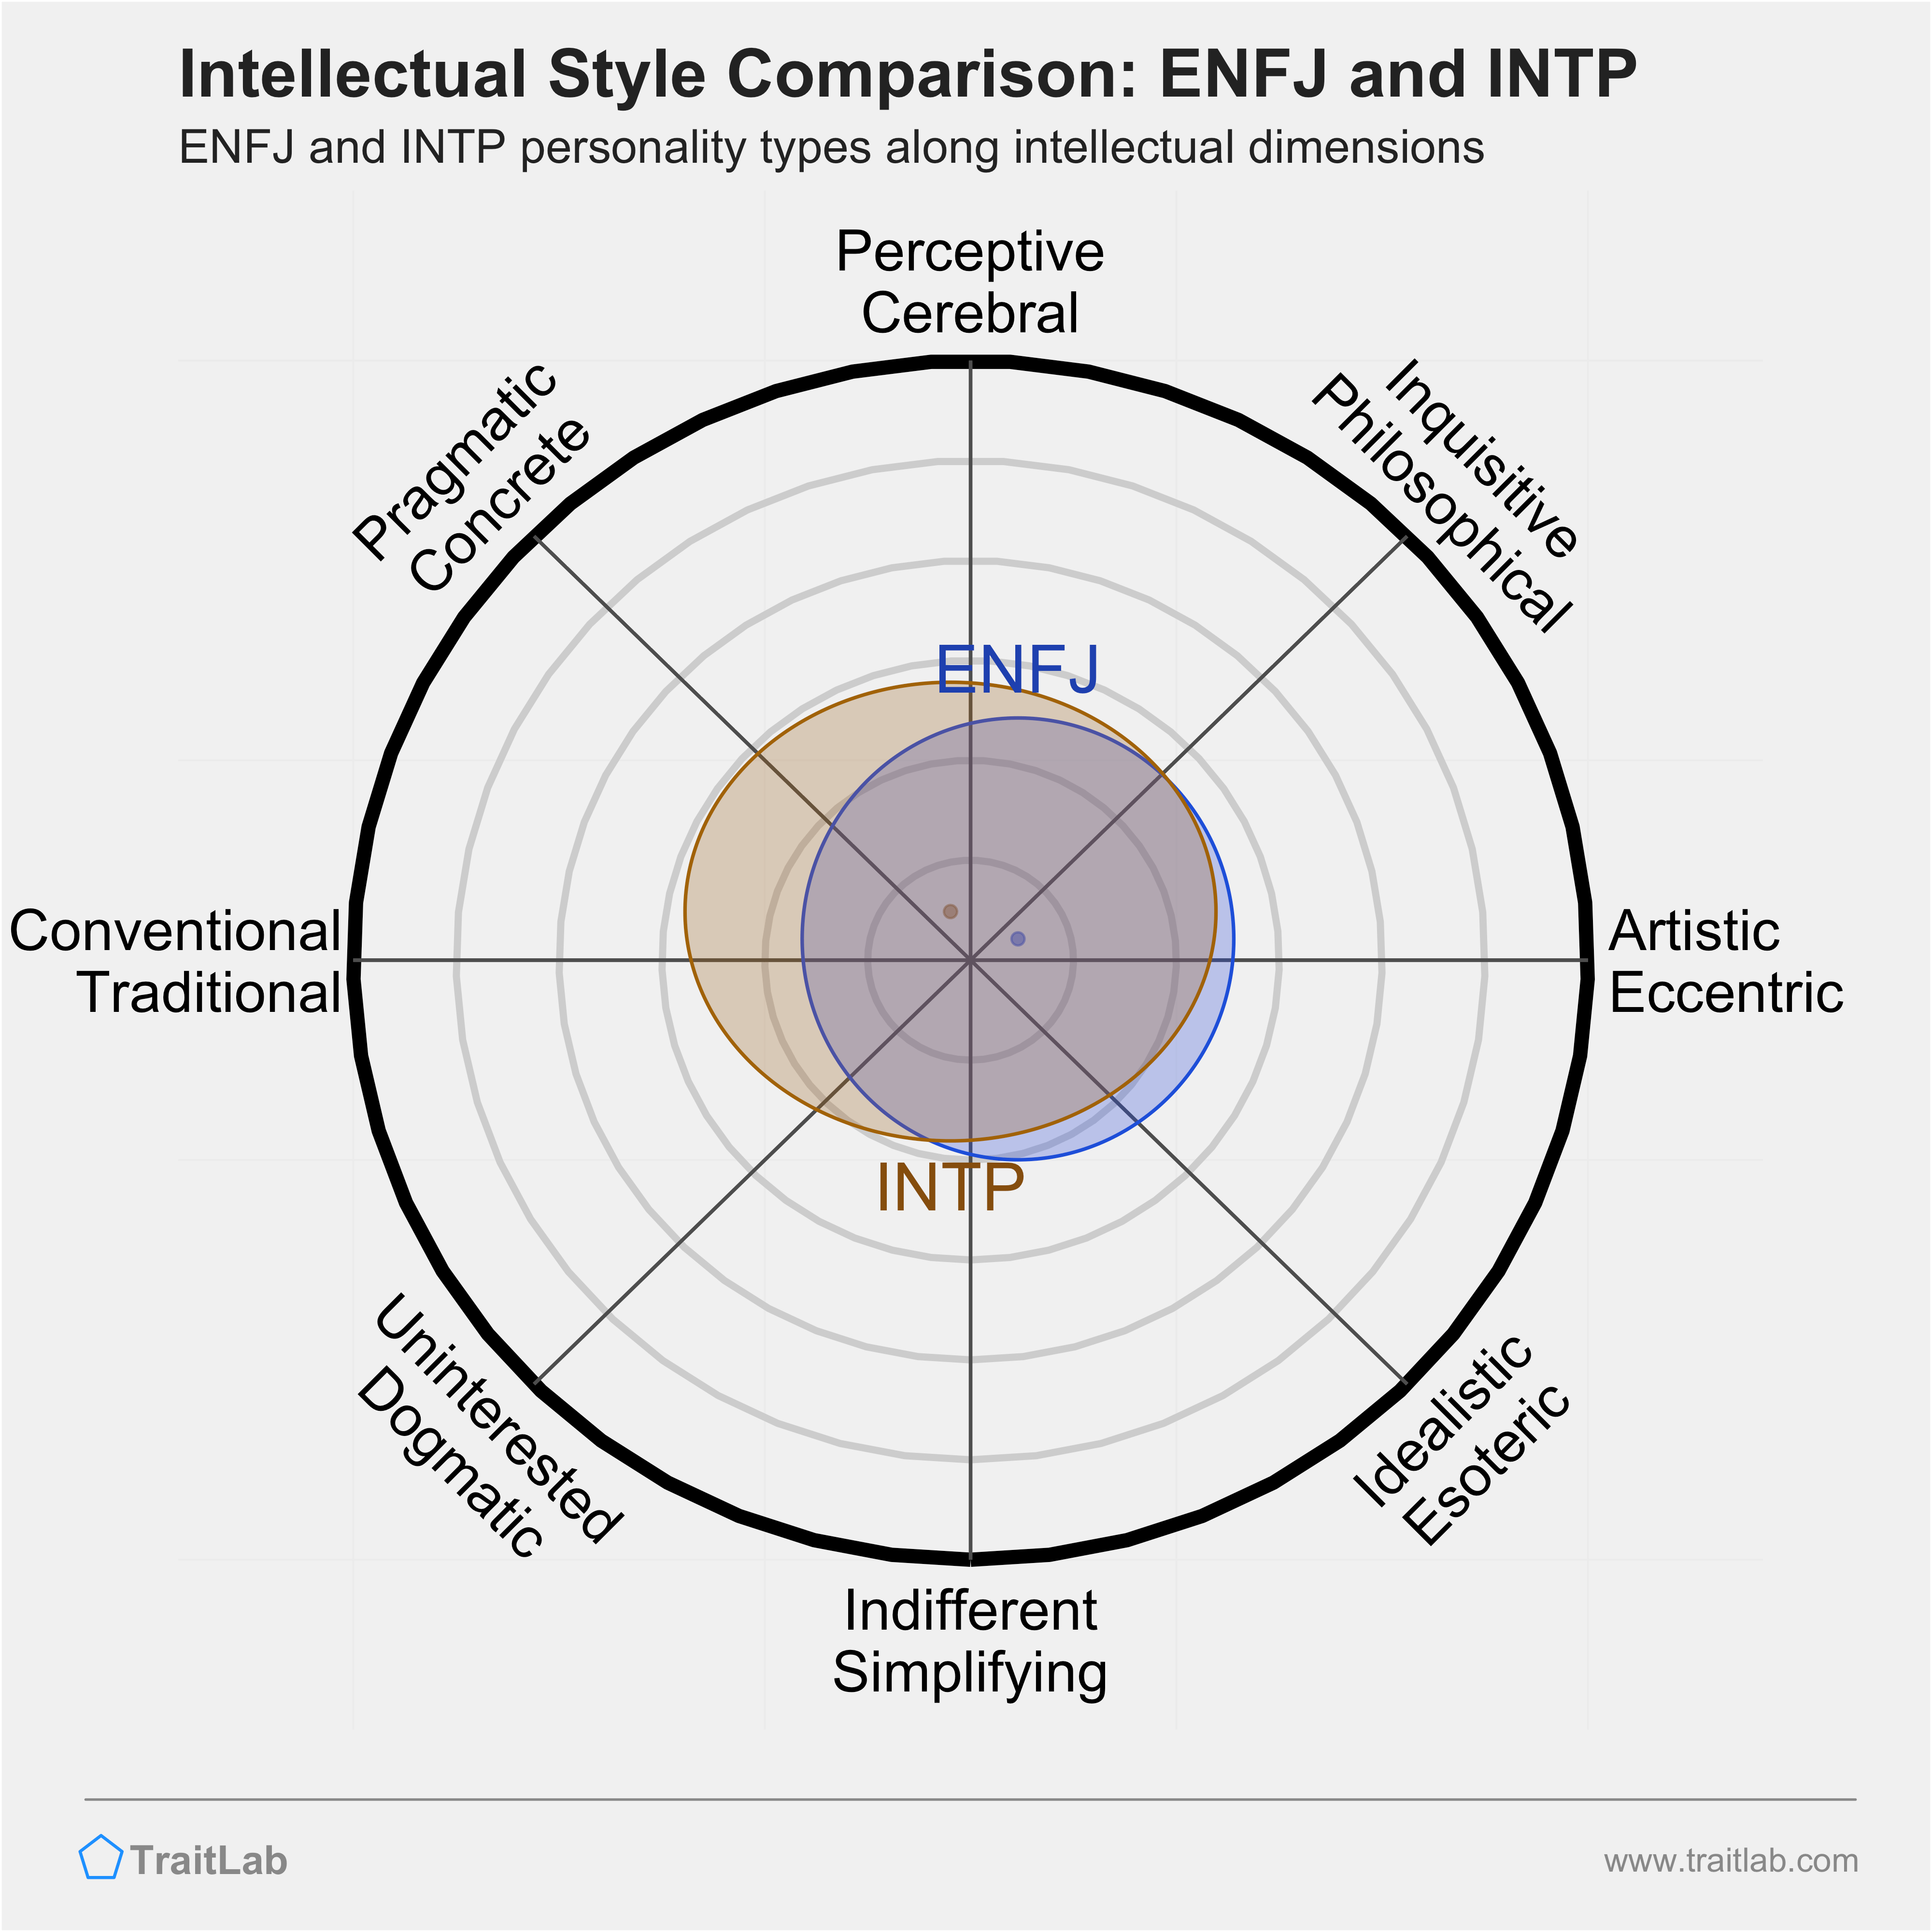 ENFJ and INTP comparison across intellectual dimensions